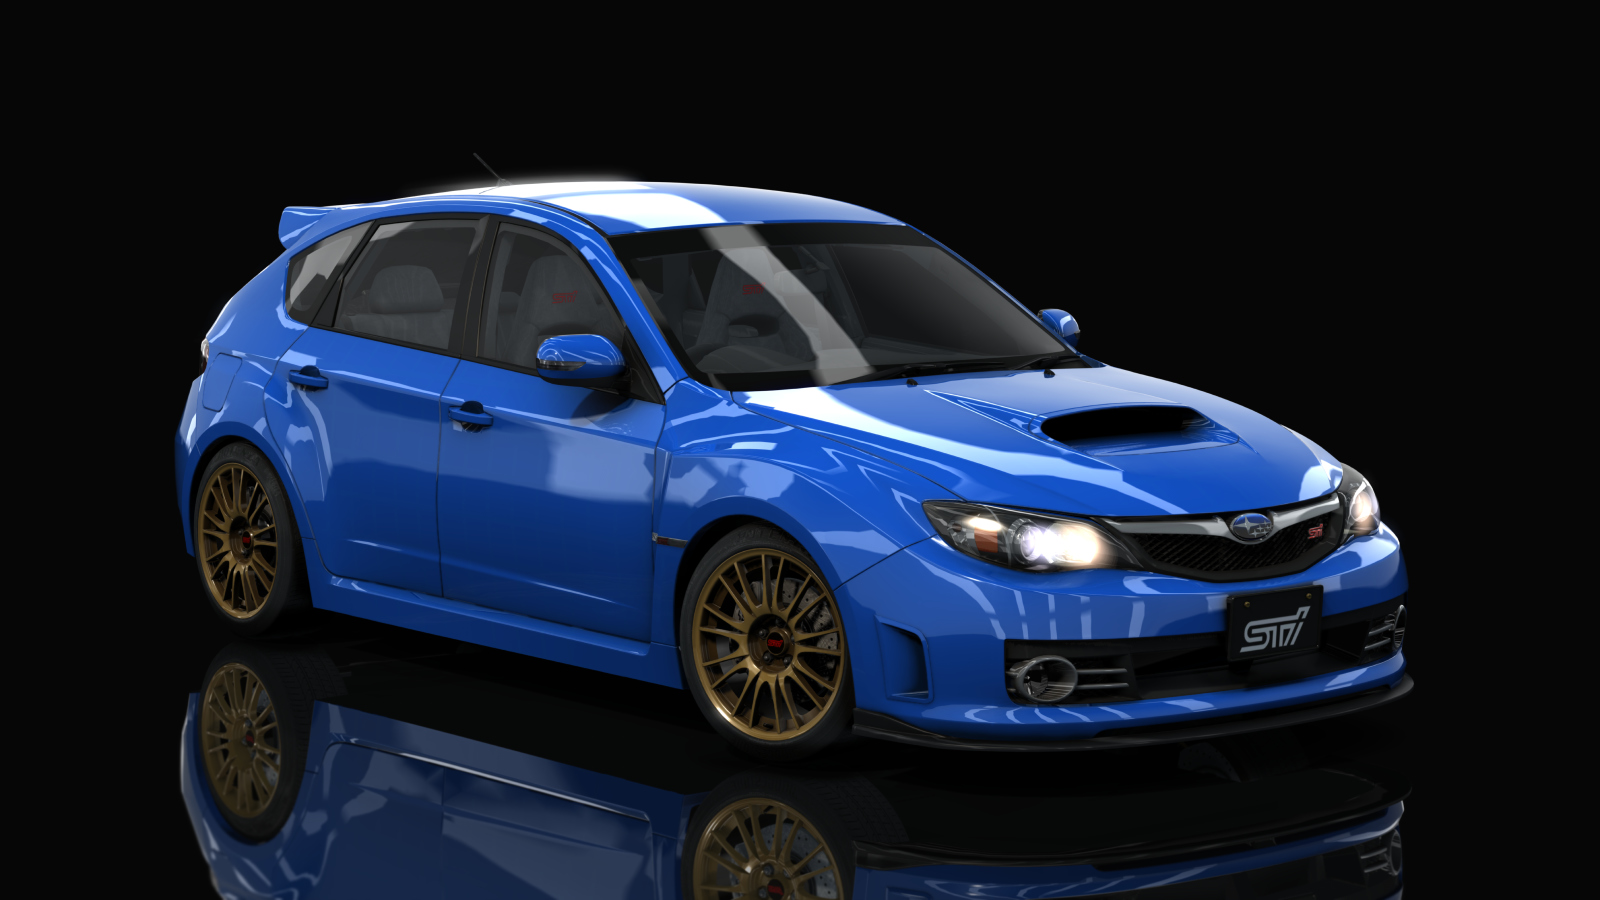 HOTHEAD21 Subaru Impreza WRX STi [GRB], skin world_rally_blue